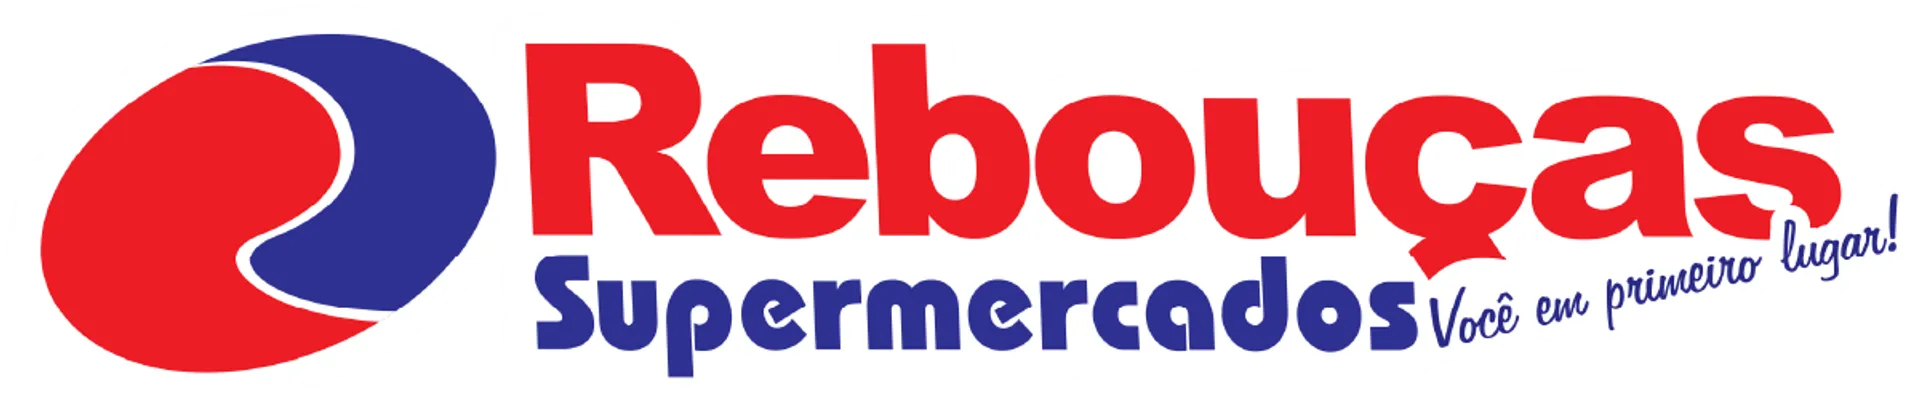 REBOUÇAS SUPERMERCADOS logo